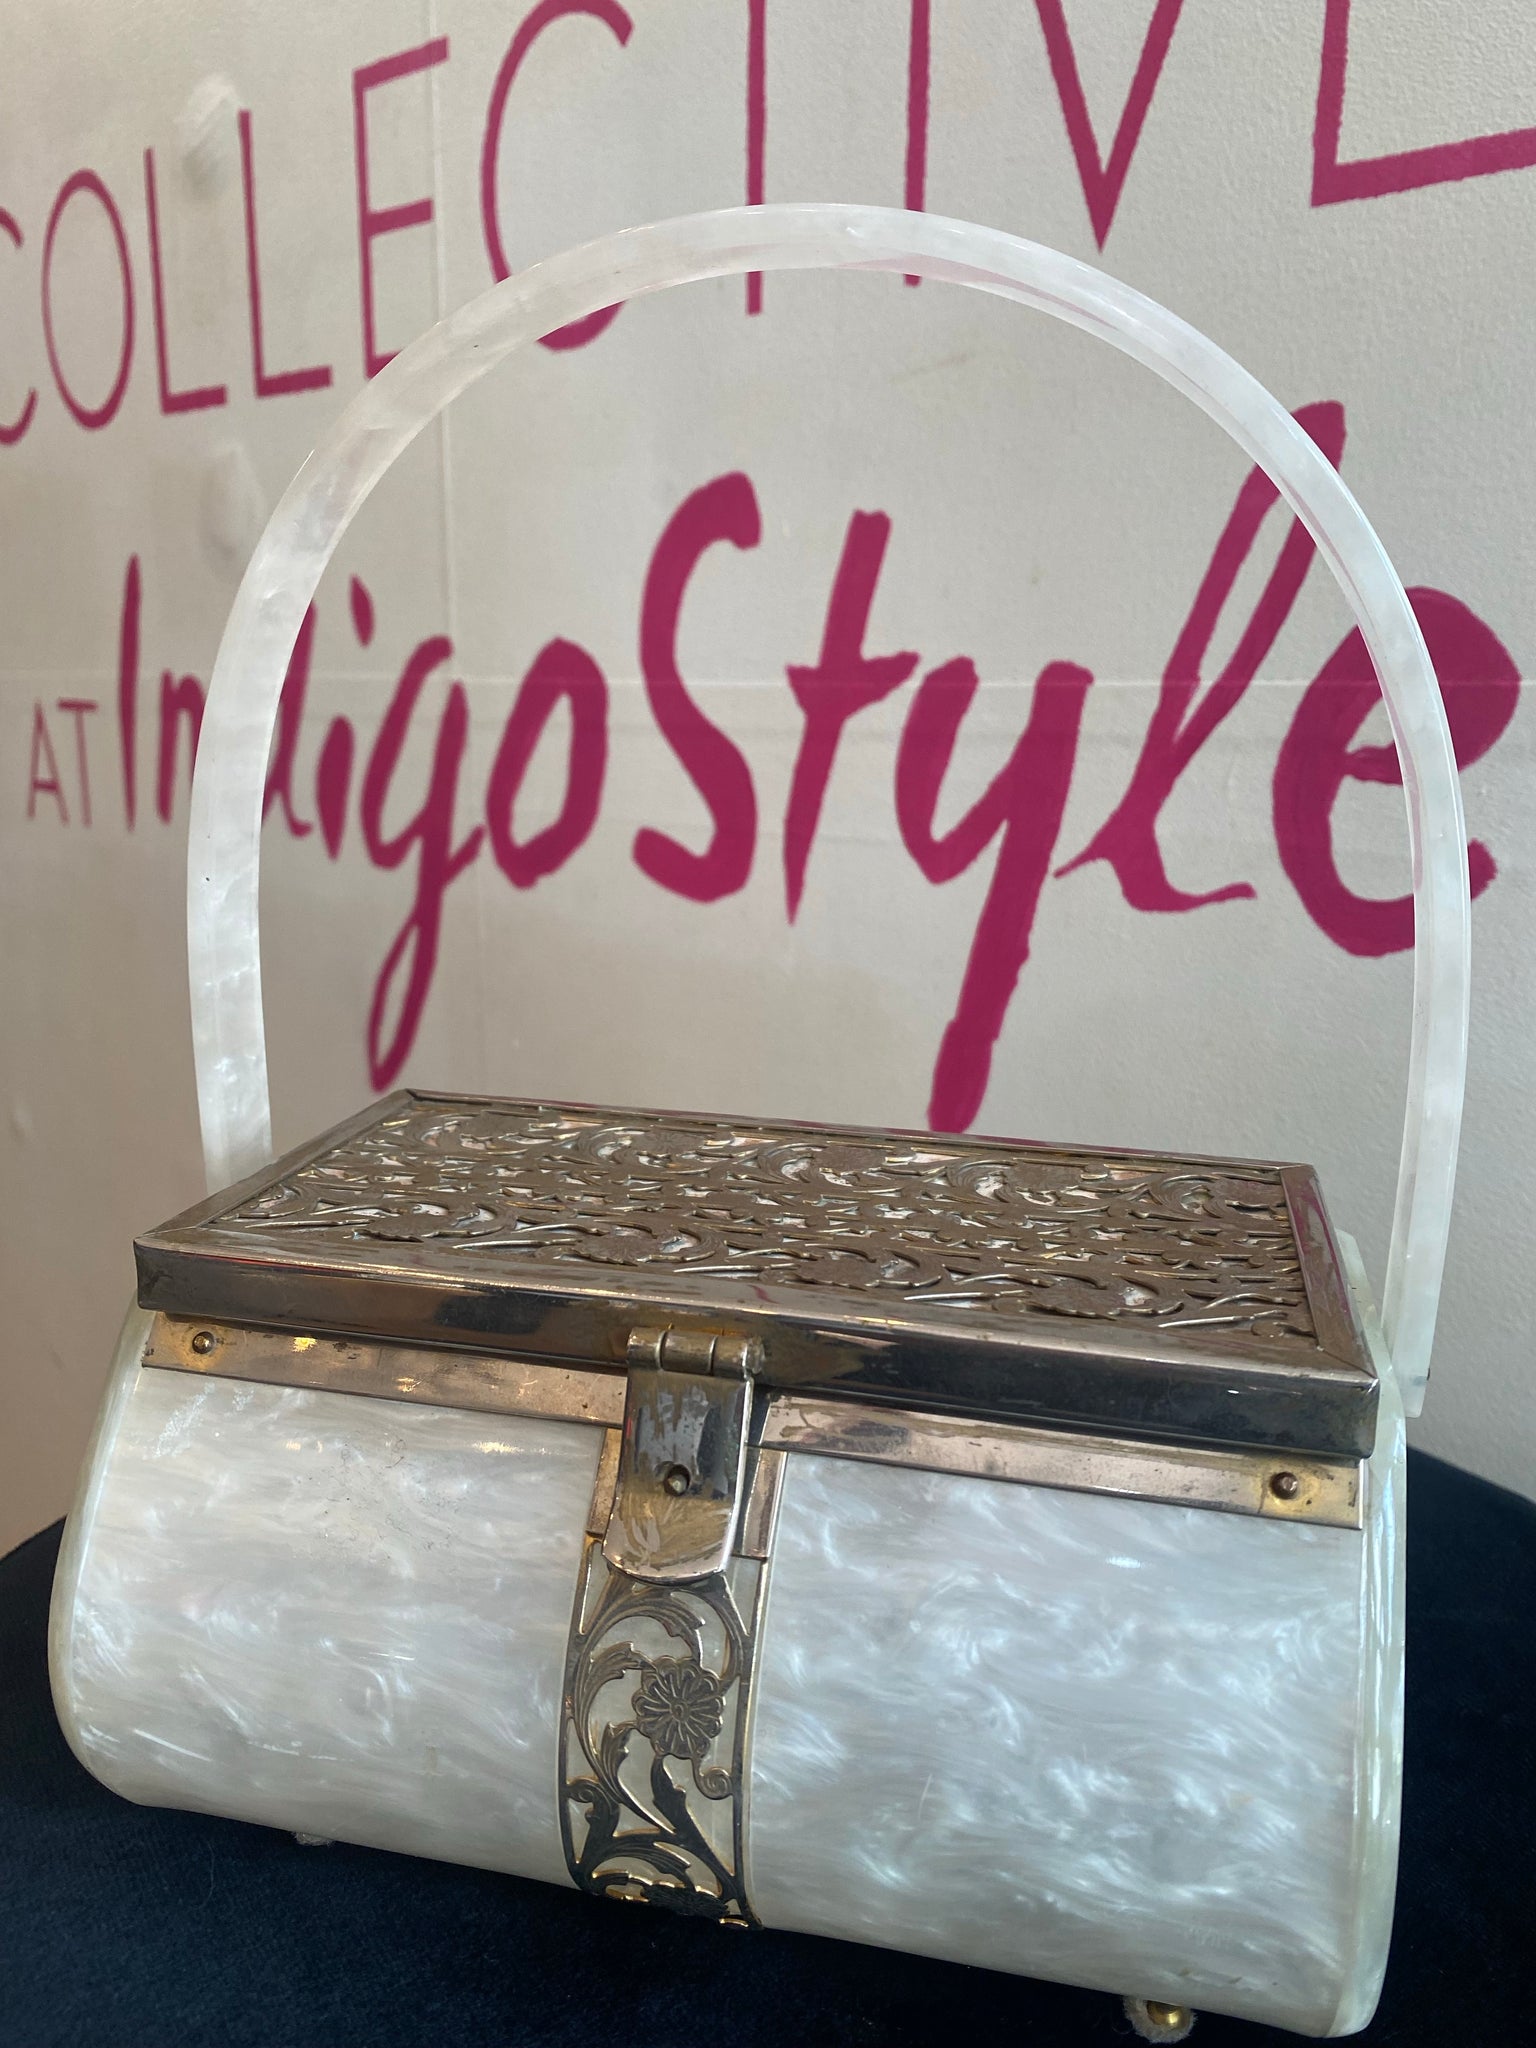 Vintage box purse made - Gem